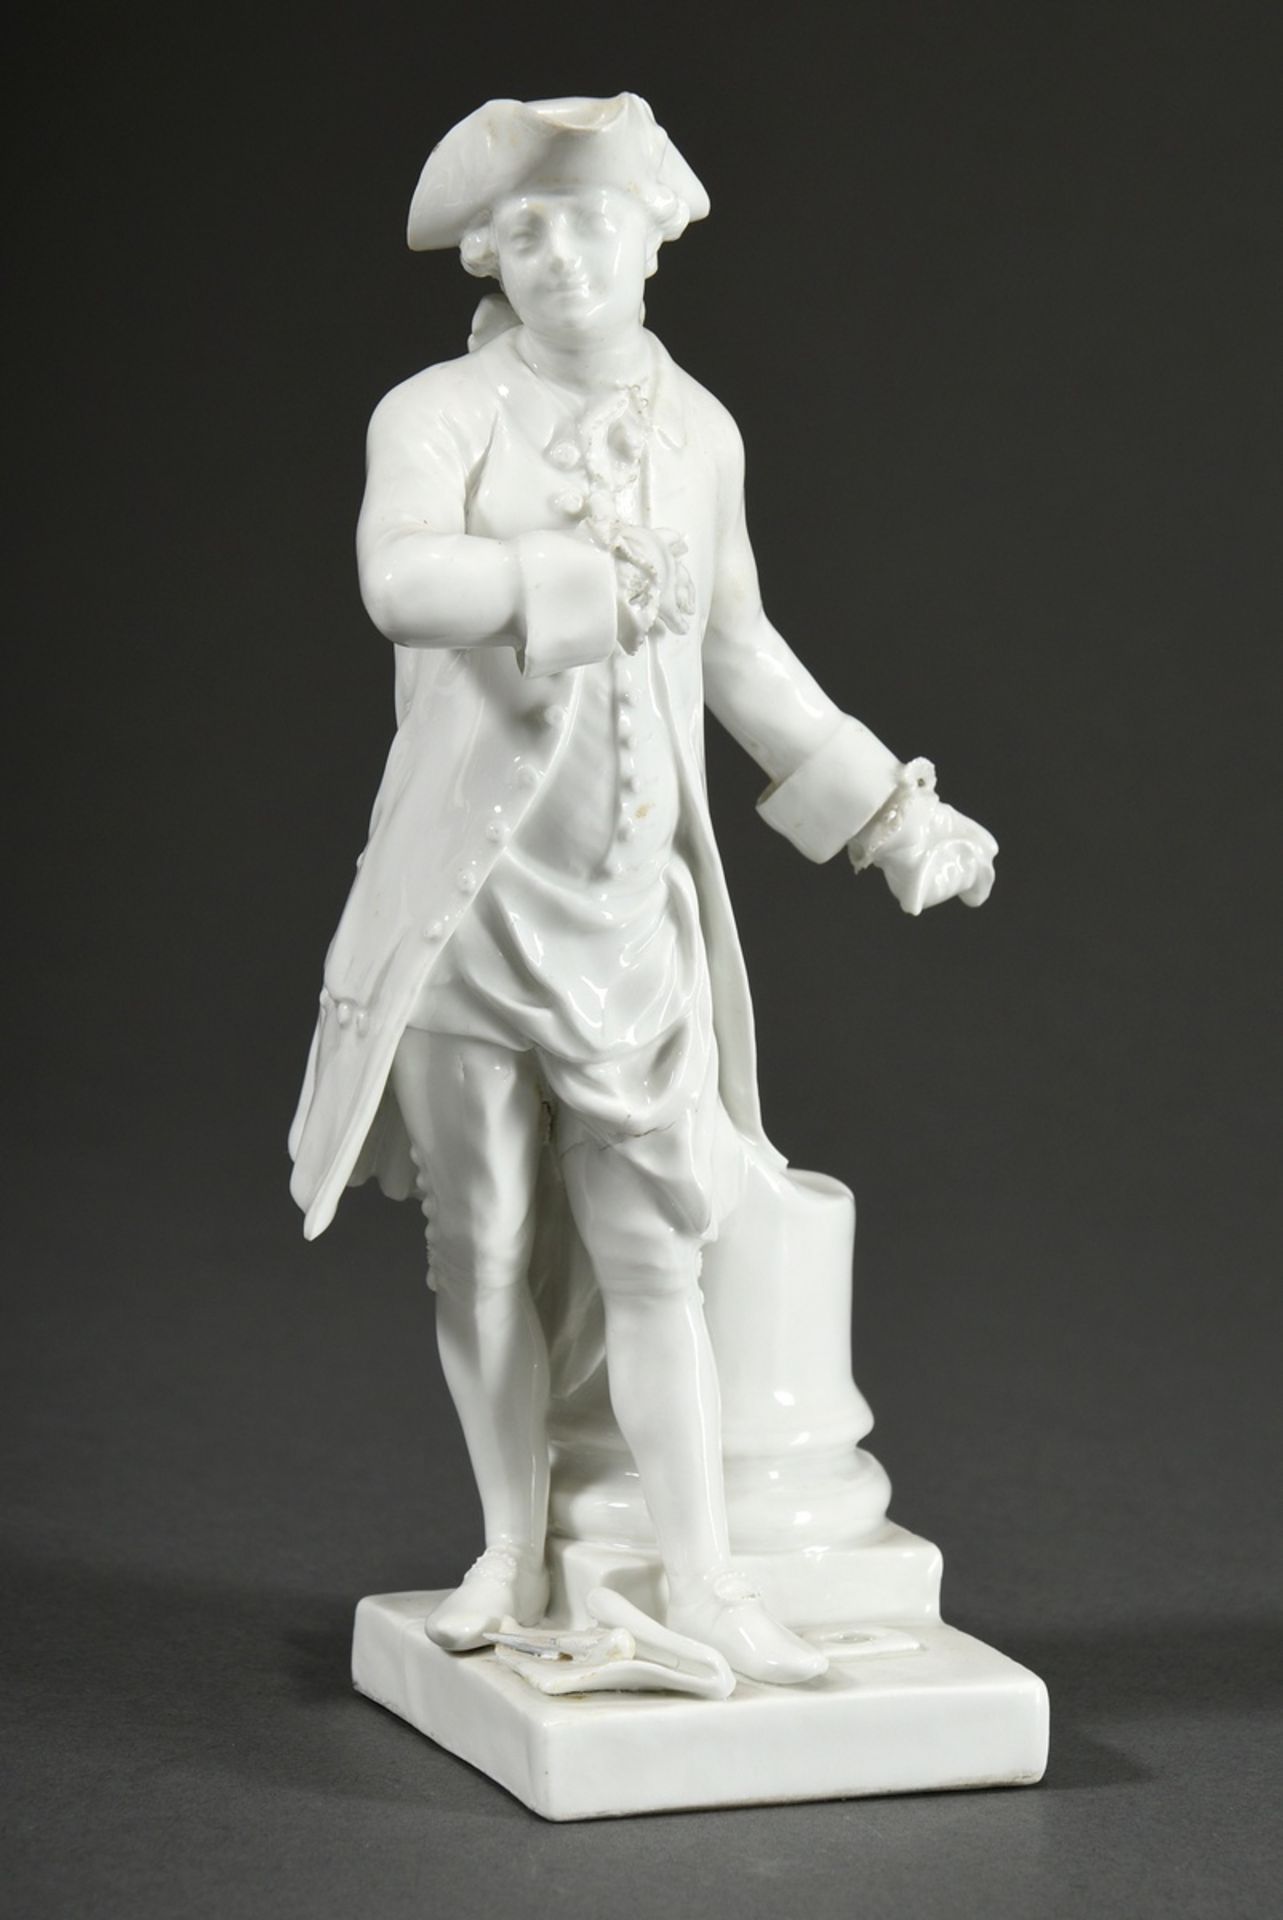 KPM figure " freemason journeyman", unpainted porcelain, Berlin c. 1780, h. 20cm, Cf.: Museum für H